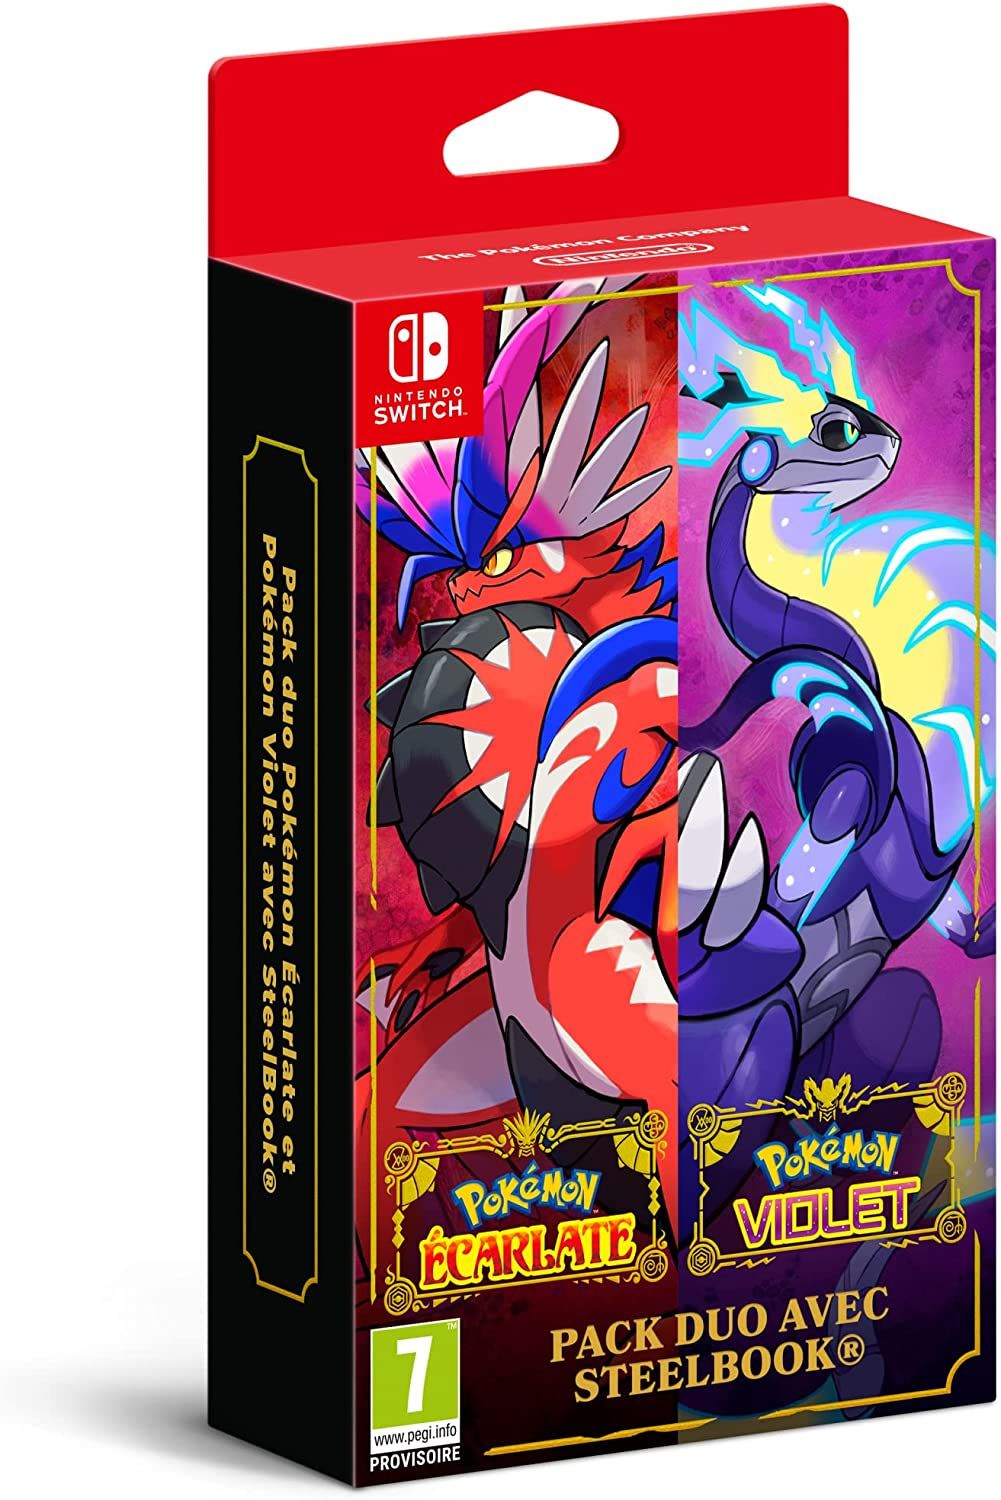 Pack Duo Pokémon Ecarlate et Violet avec SteelBook 